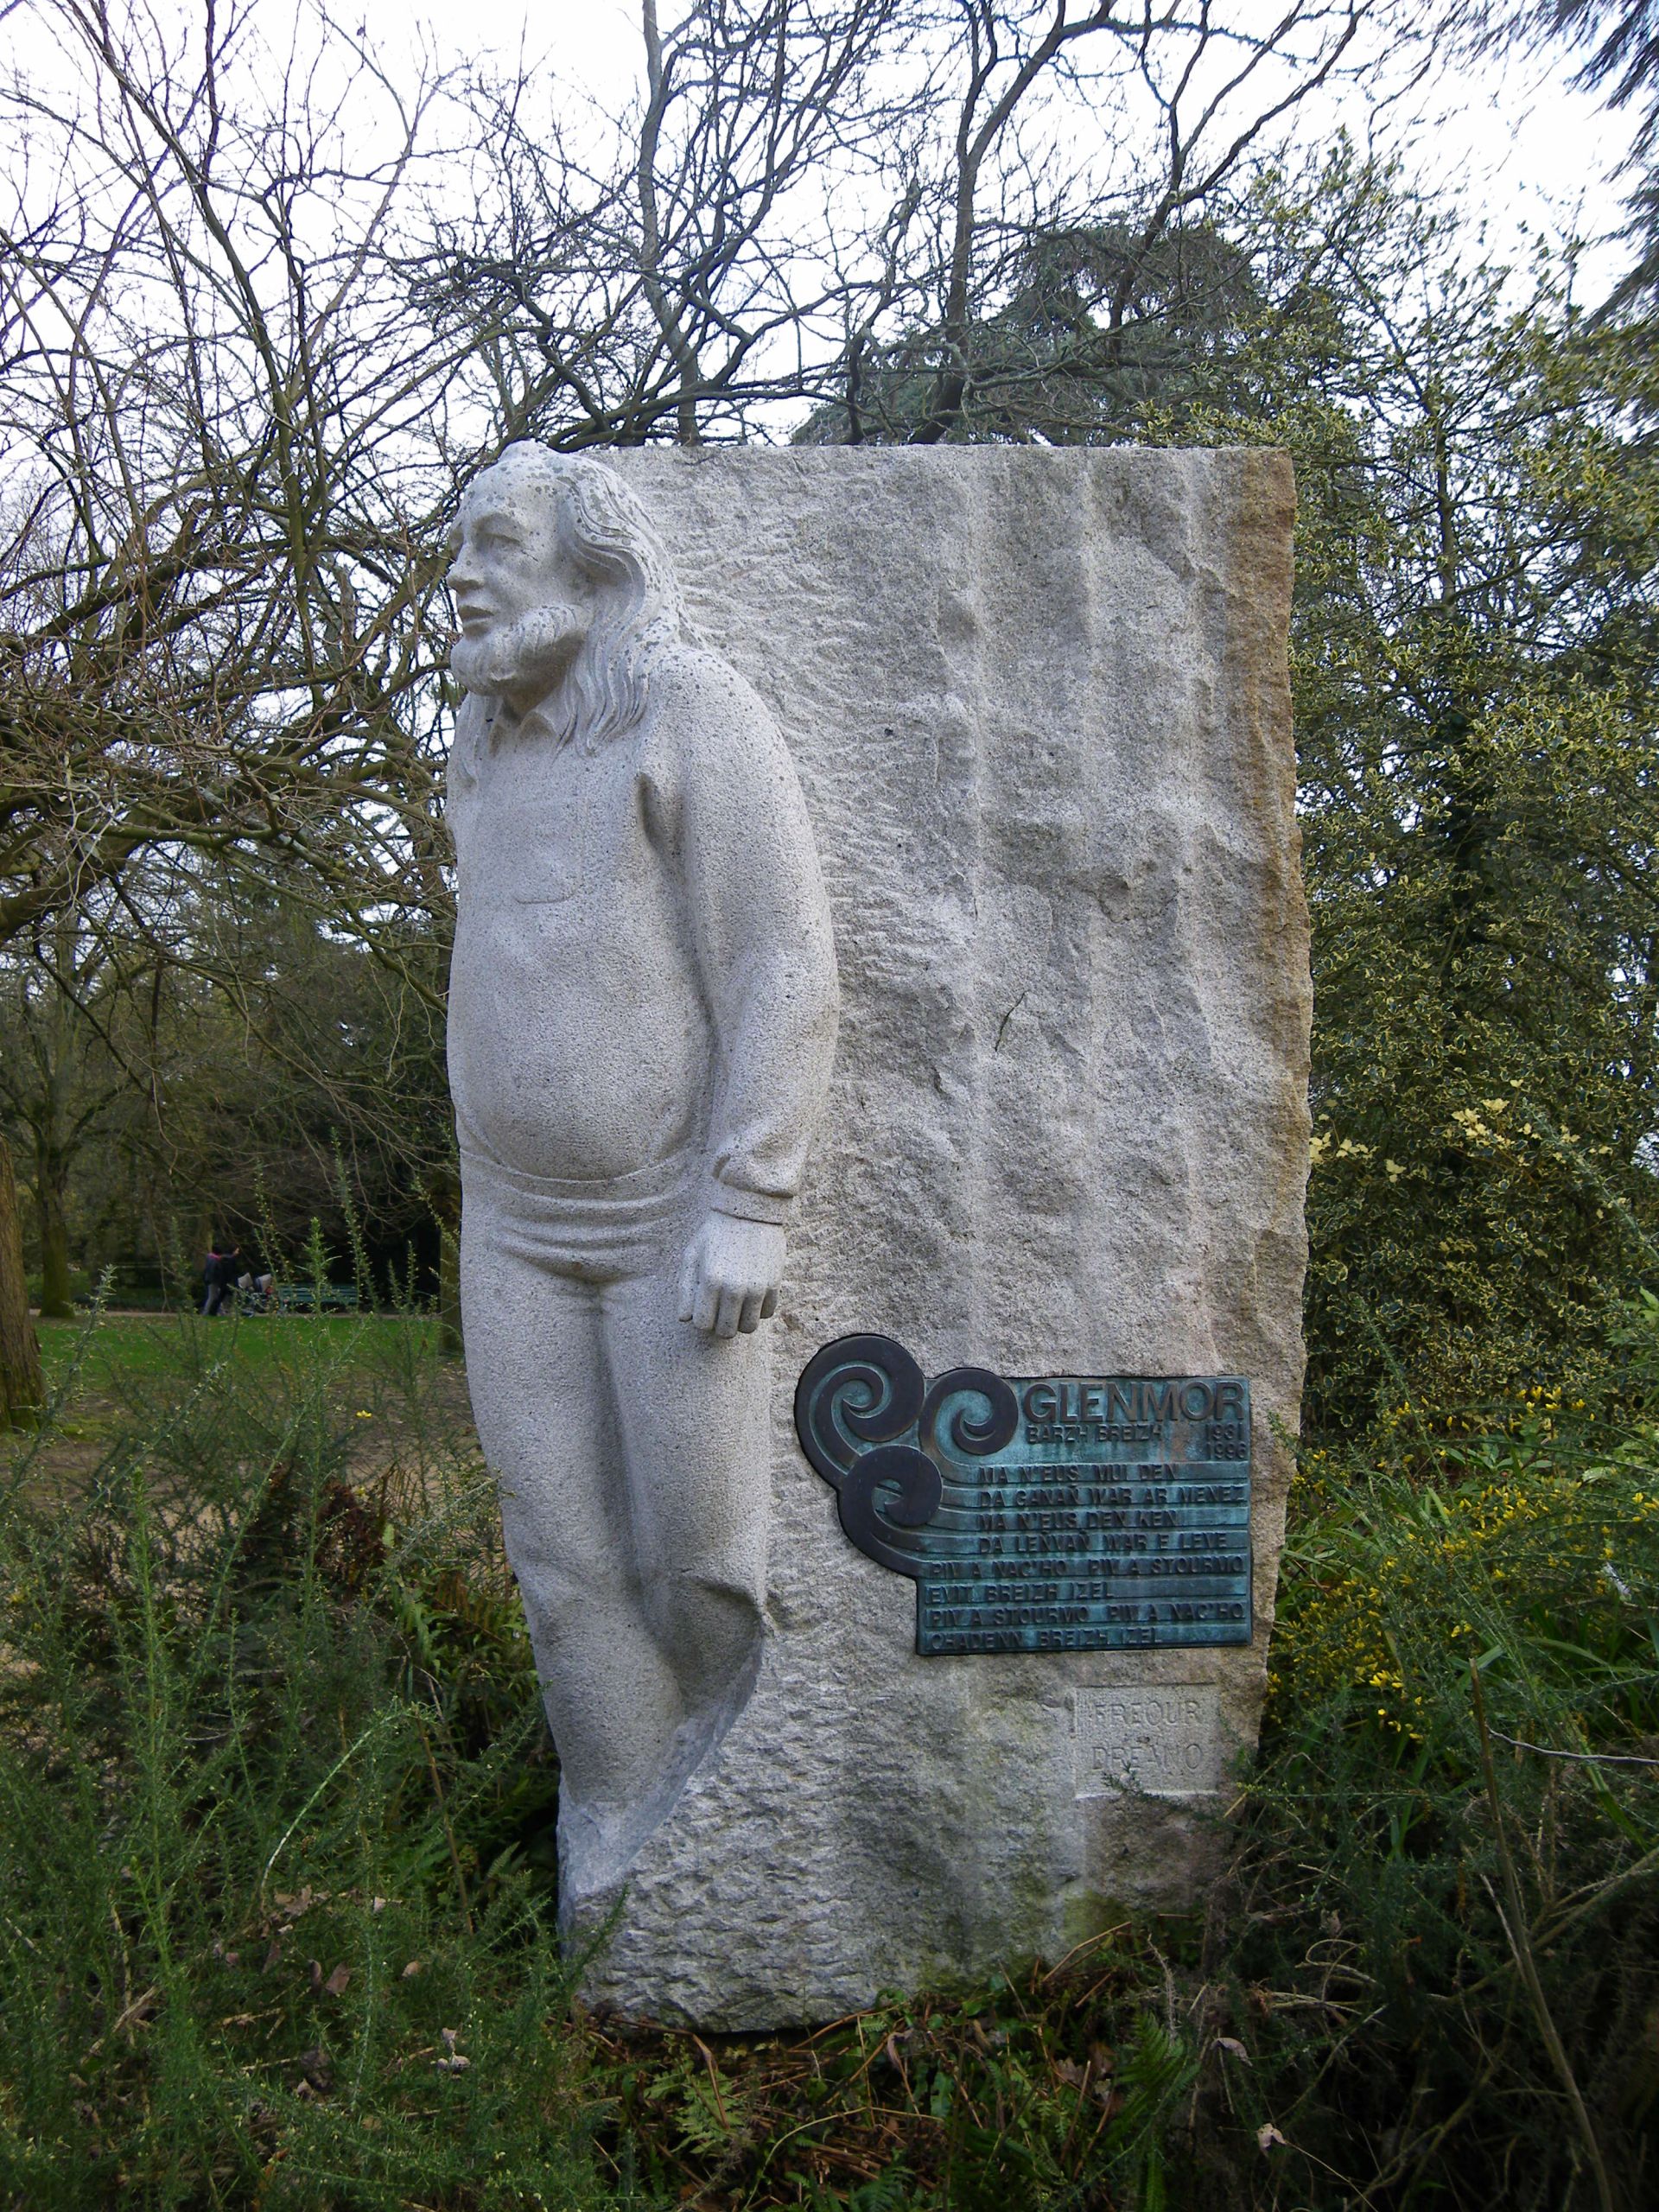 La statue de glenmor au jardin du thabor panoramio